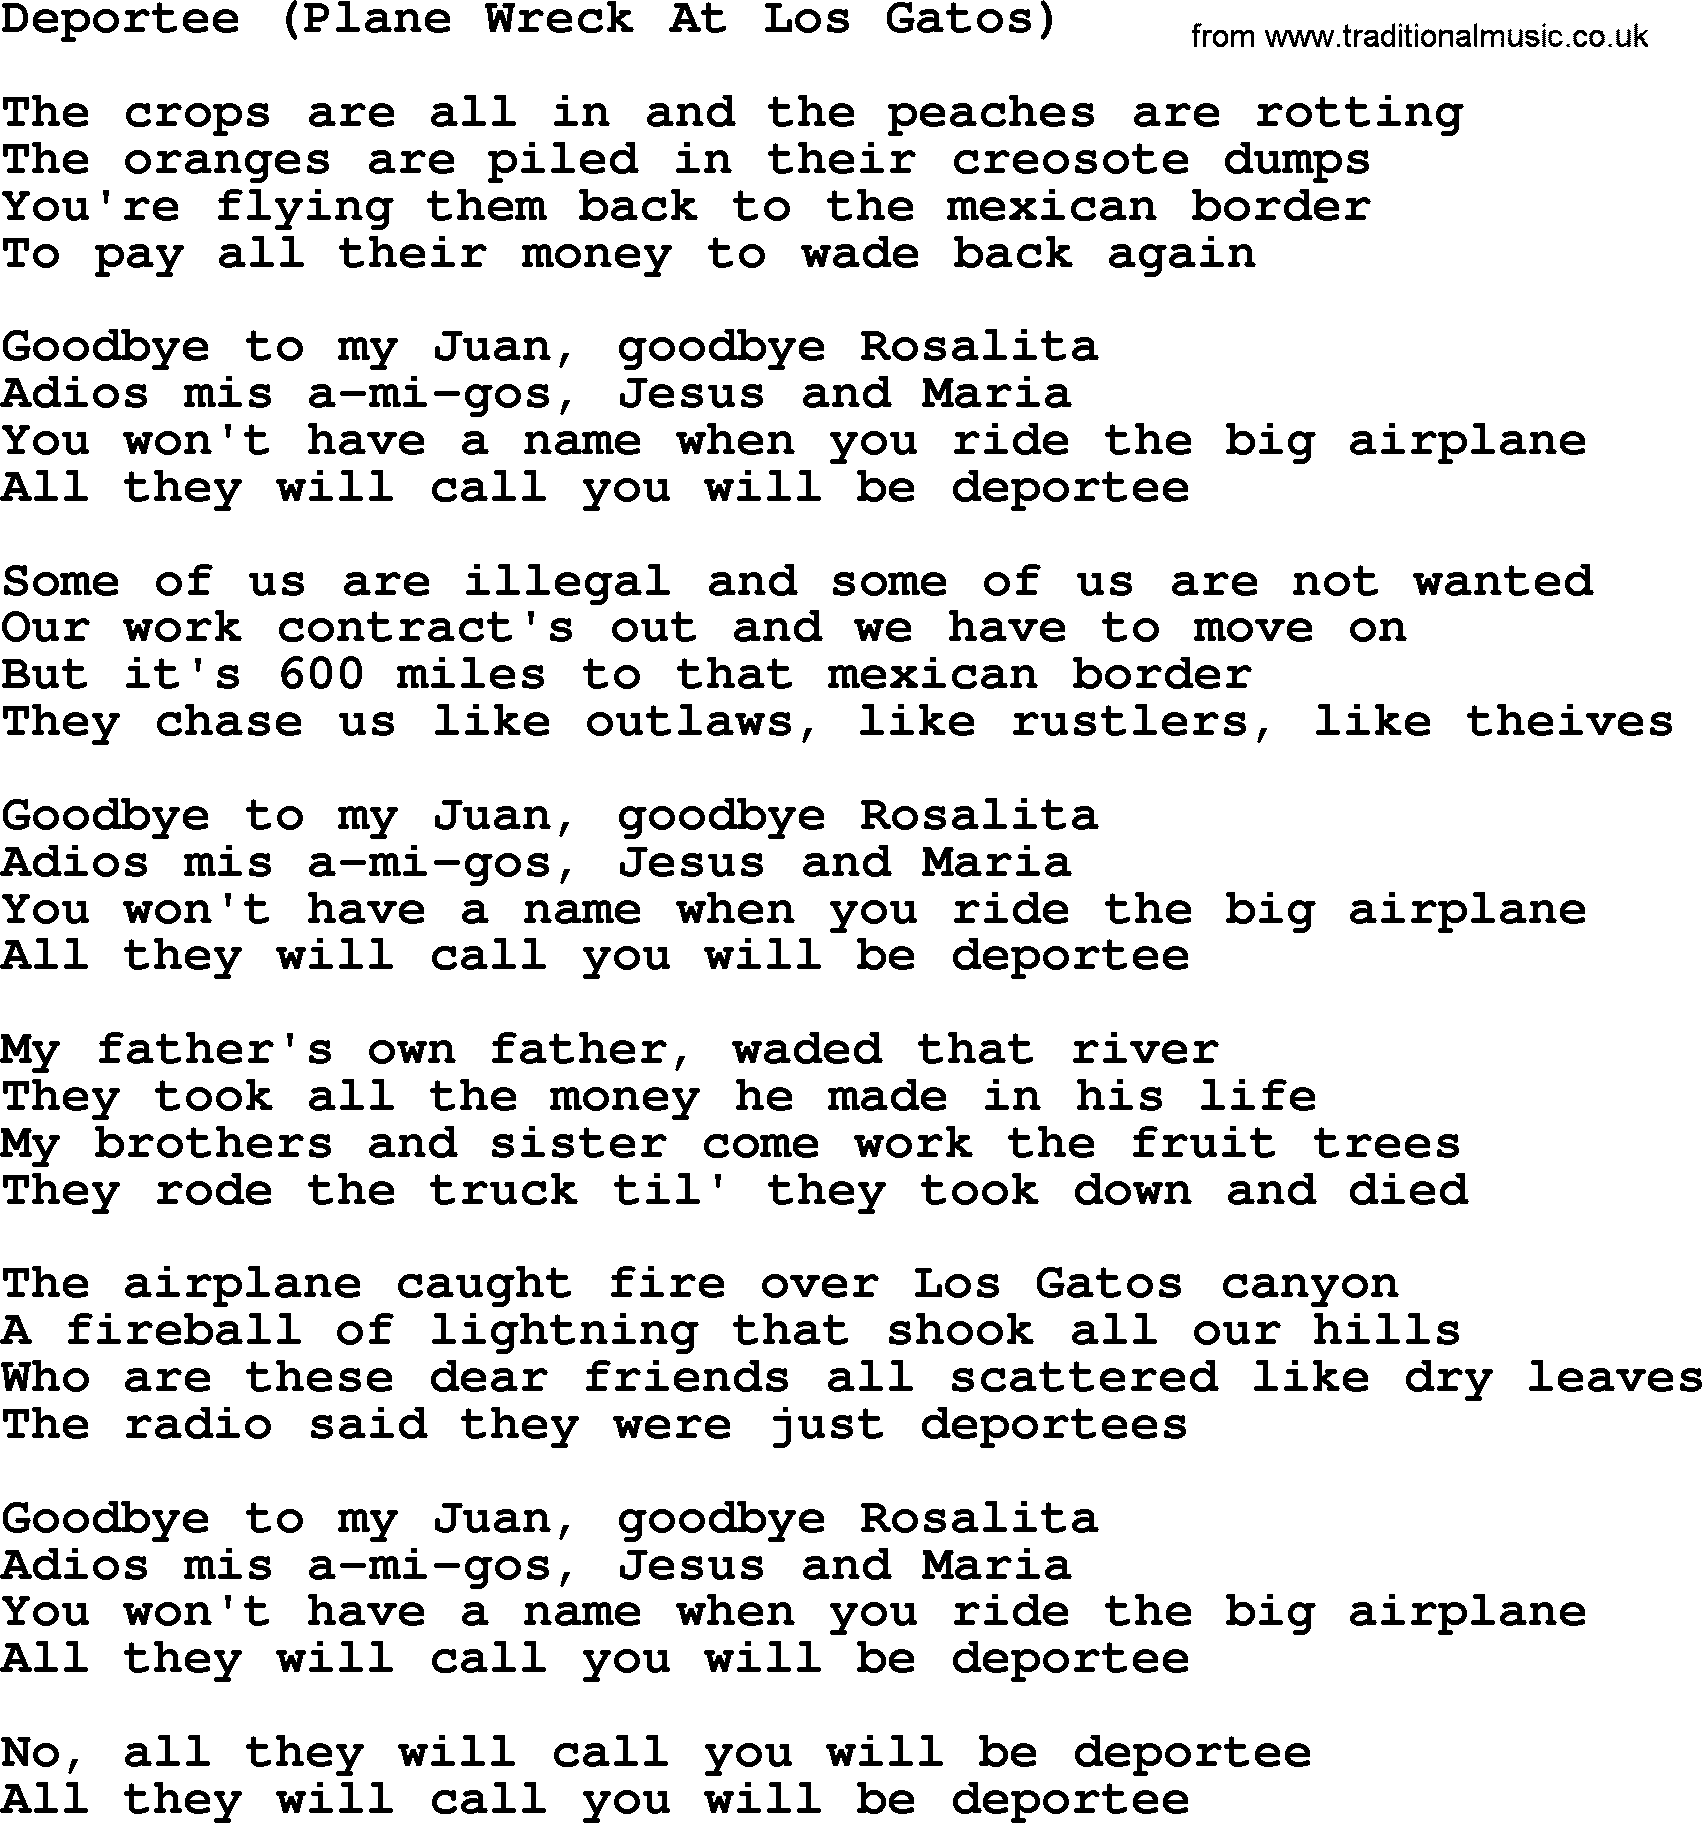 Dolly Parton song Deportee (Plane Wreck At Los Gatos).txt lyrics